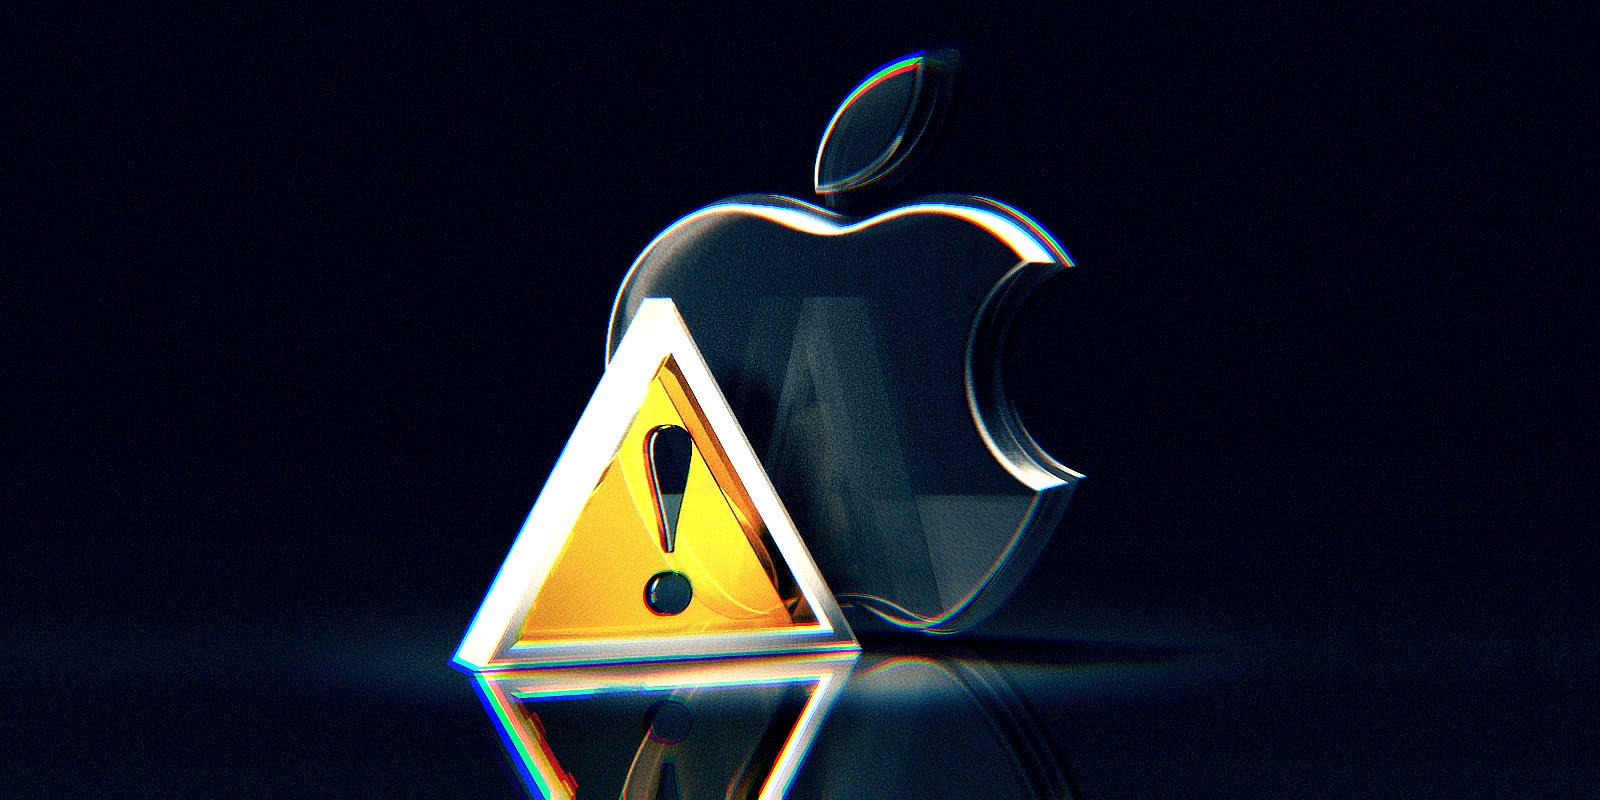 Apple fixed three new actively exploited zero-day vulnerabilities